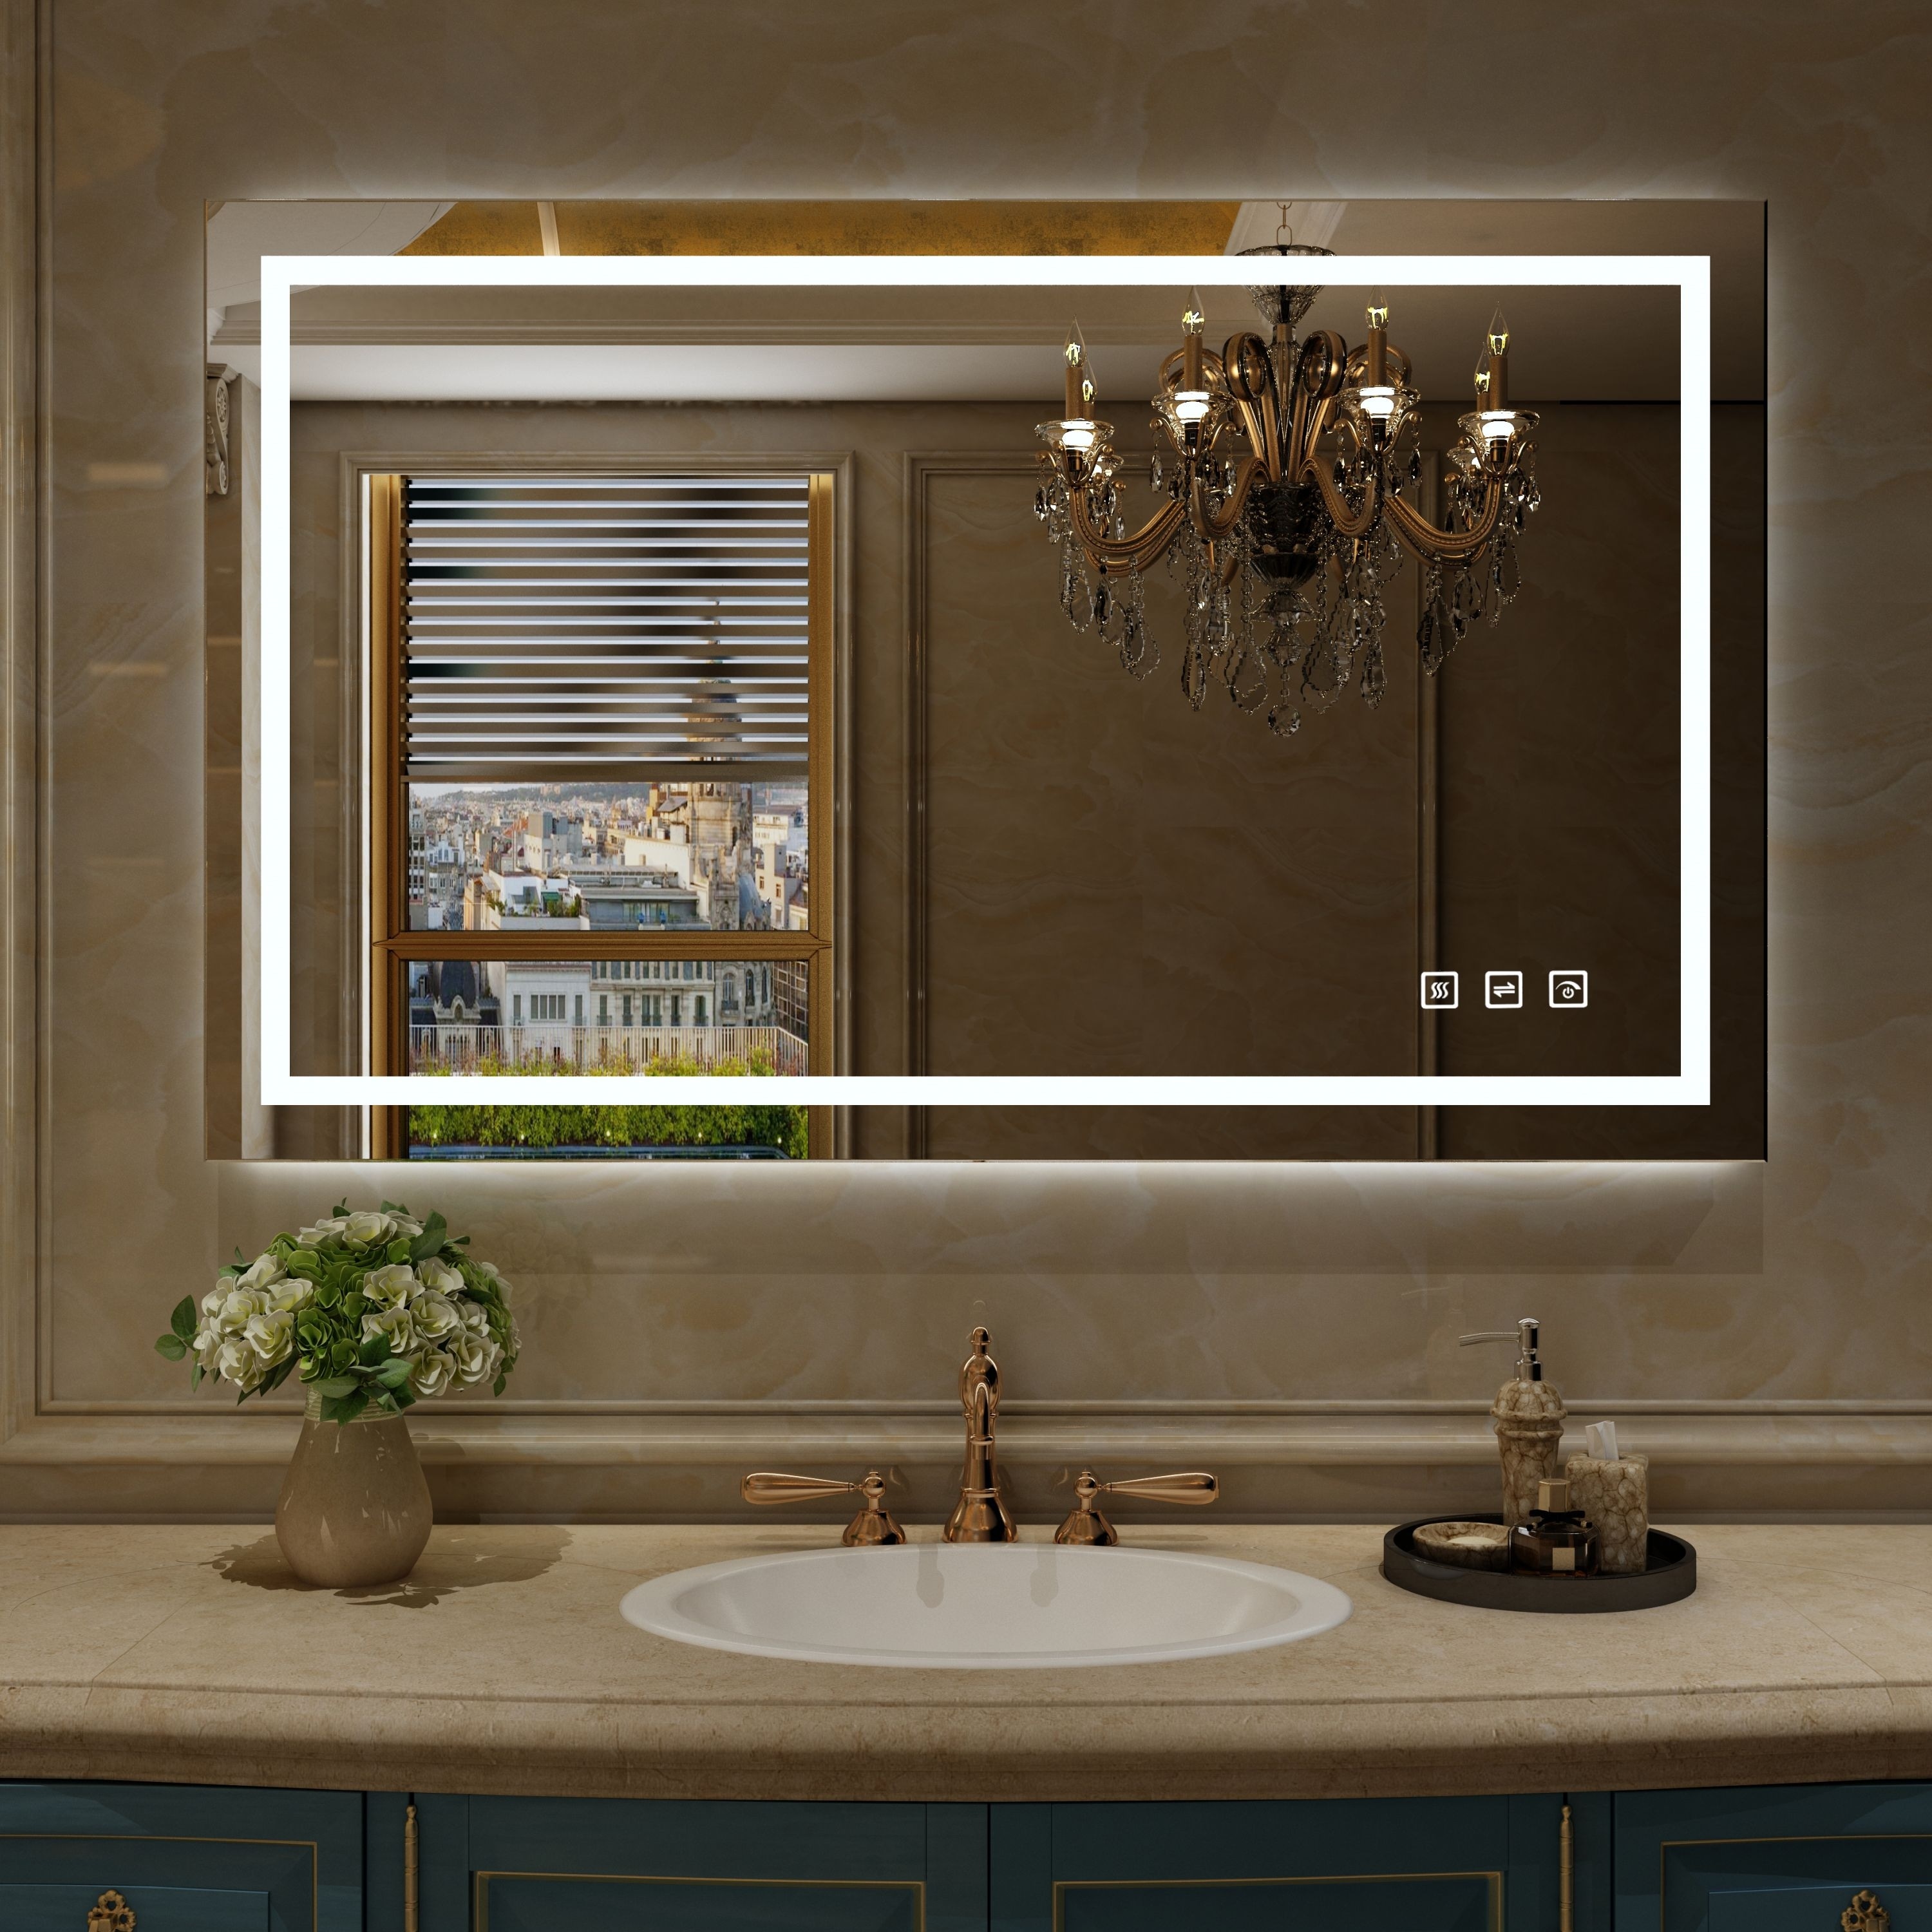 https://ak1.ostkcdn.com/images/products/is/images/direct/da675c58f22c44cf242f1f8b4253ad2bda550bf3/TOOLKISS-Anti-Fog-Bathroom-Mirror-with-Dimmable-Light-%2C-Frameless-Rectangular-Wall-Vanity-Mirror.jpg